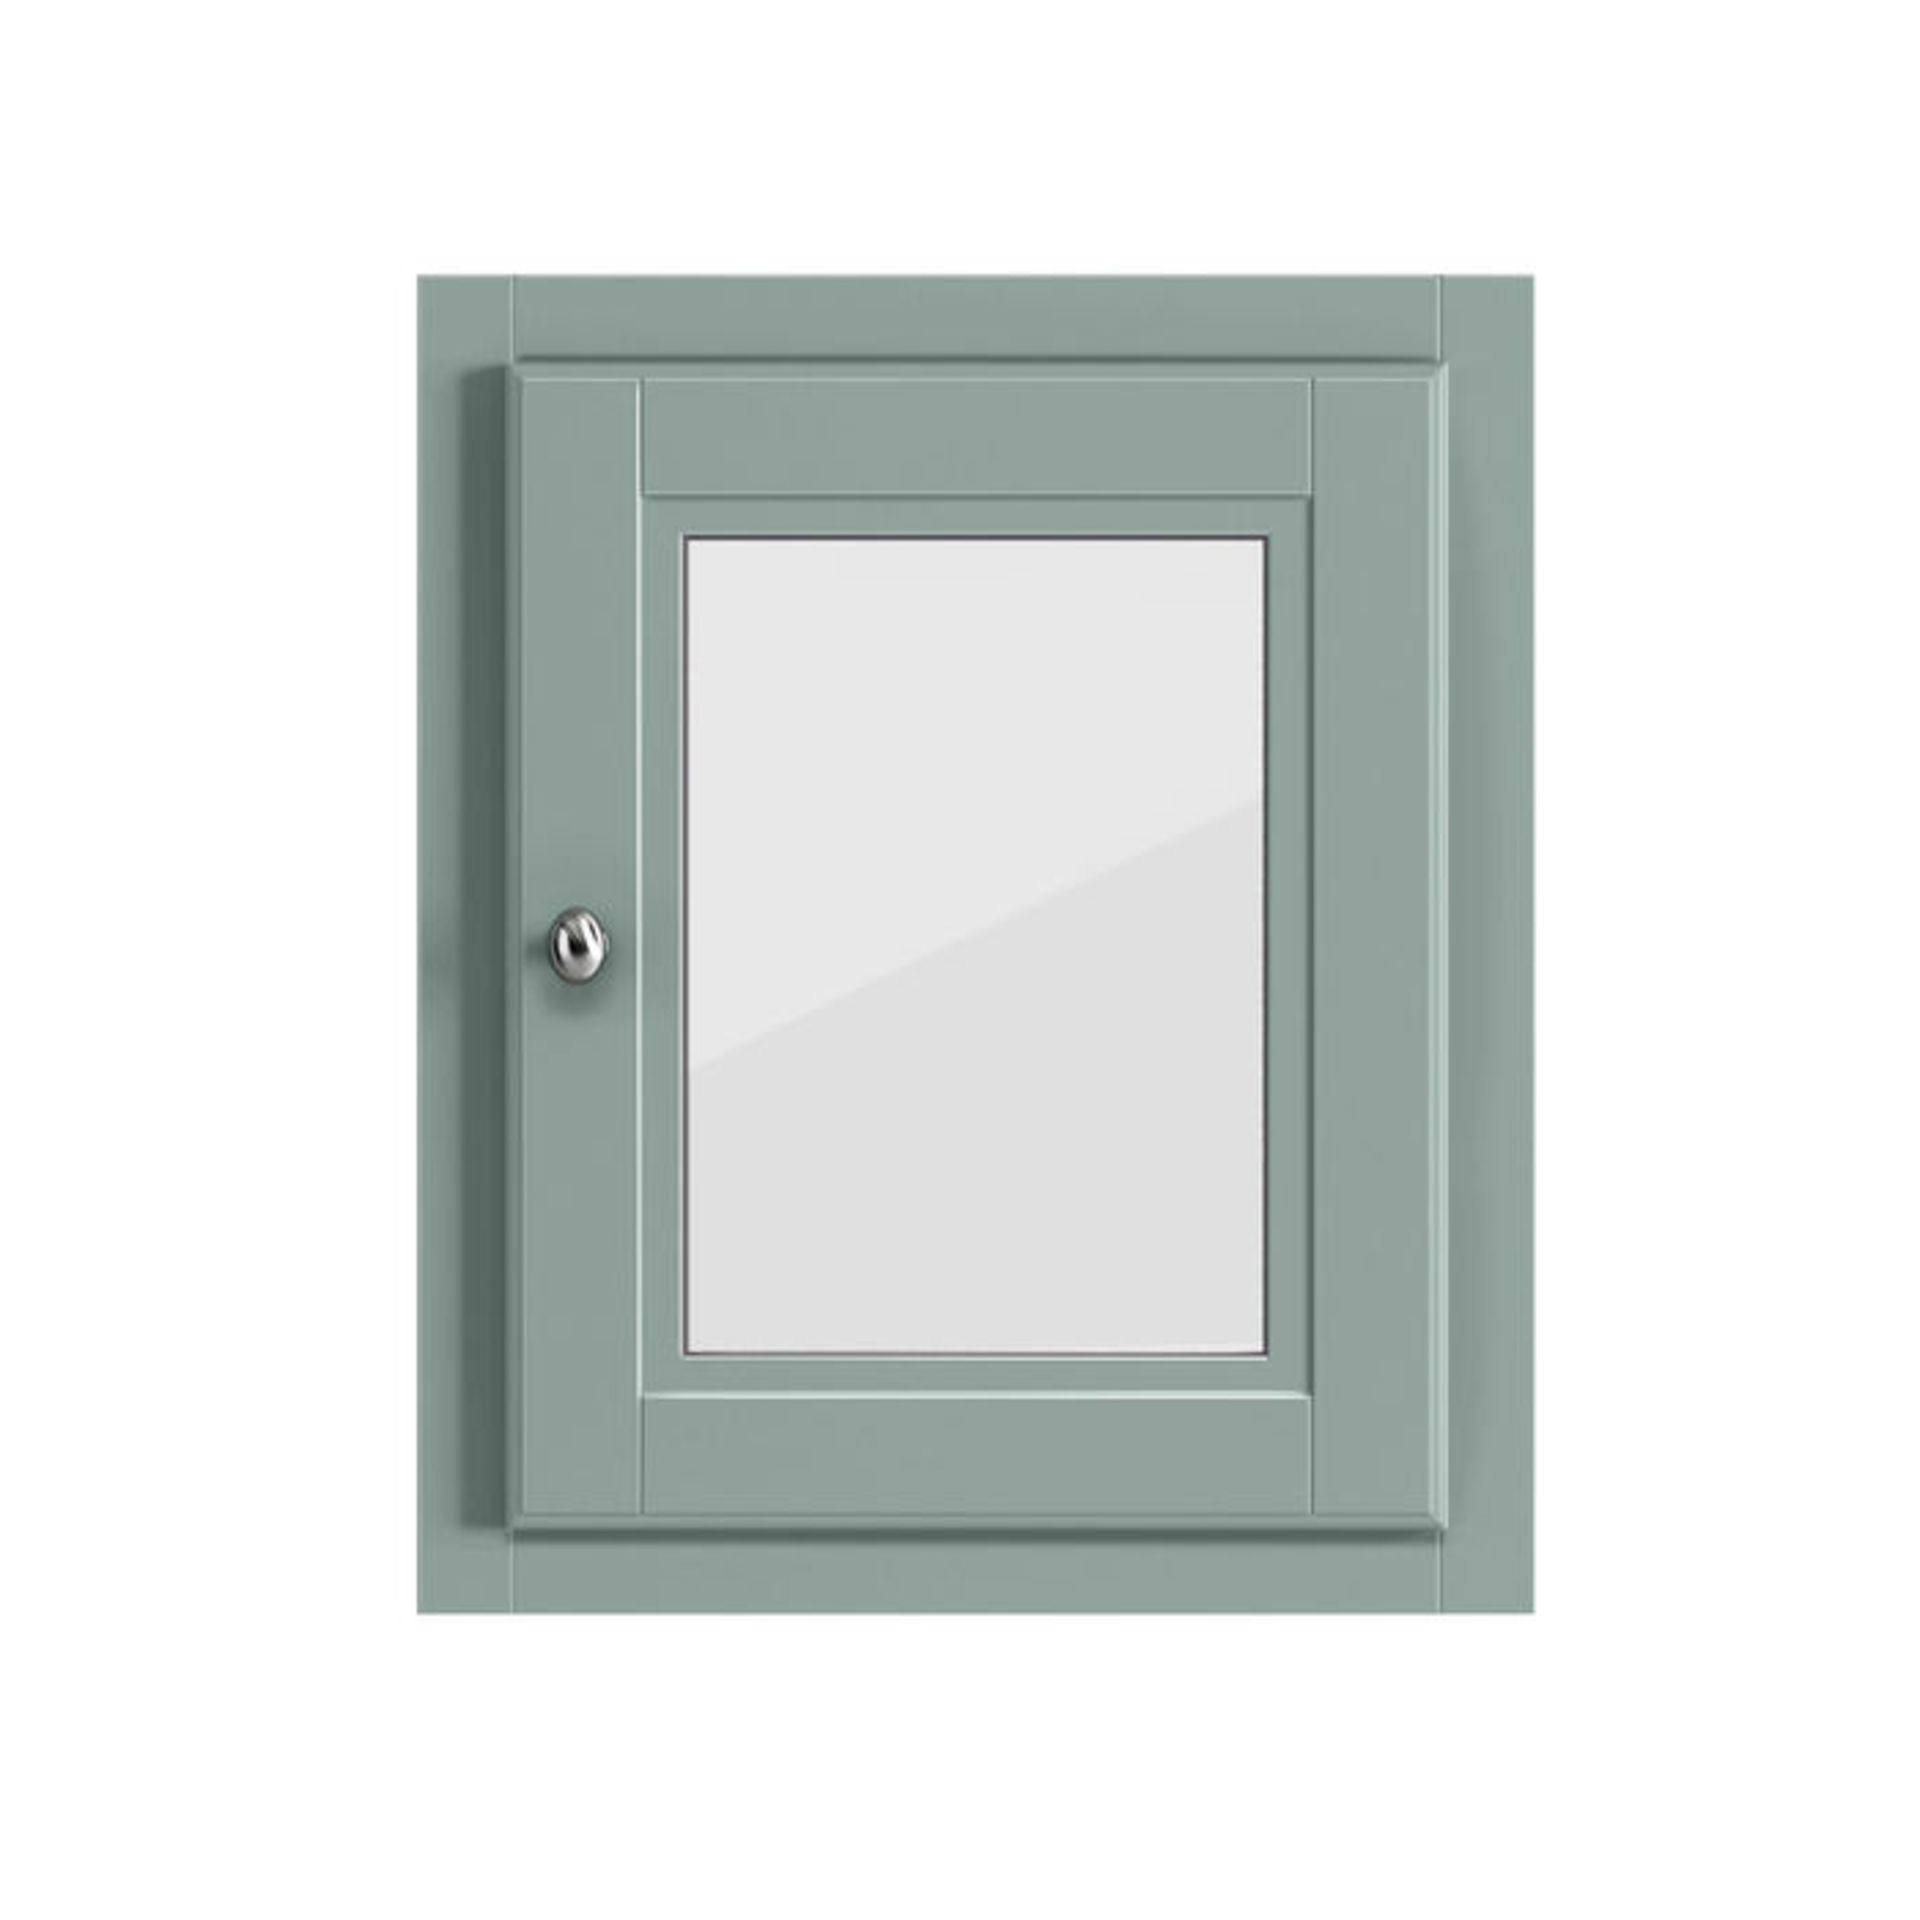 (XX39) Cambridge Single Door Mirror Cabinet - Marine Mist. RRP £199.99. Traditional aesthetic ... - Image 5 of 5